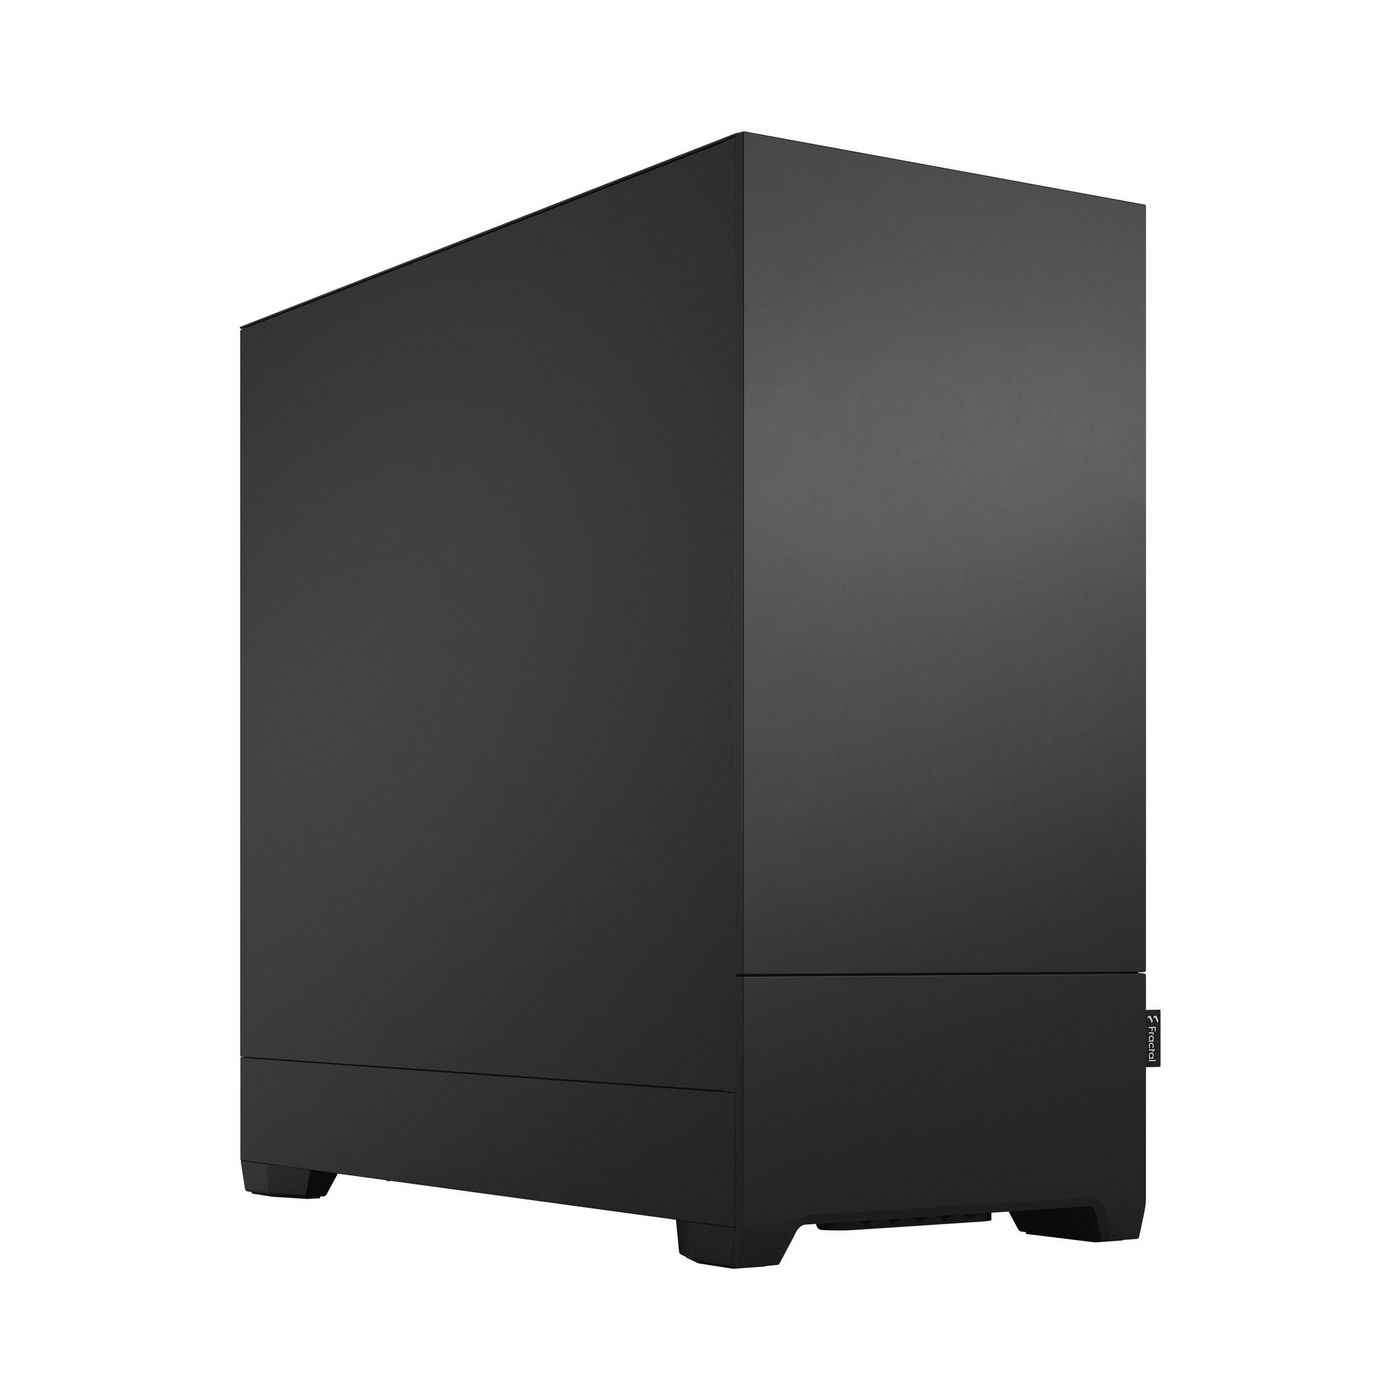 Fractal-Design FD-C-POS1A-01 W128275755 Pop Silent Tower Black 